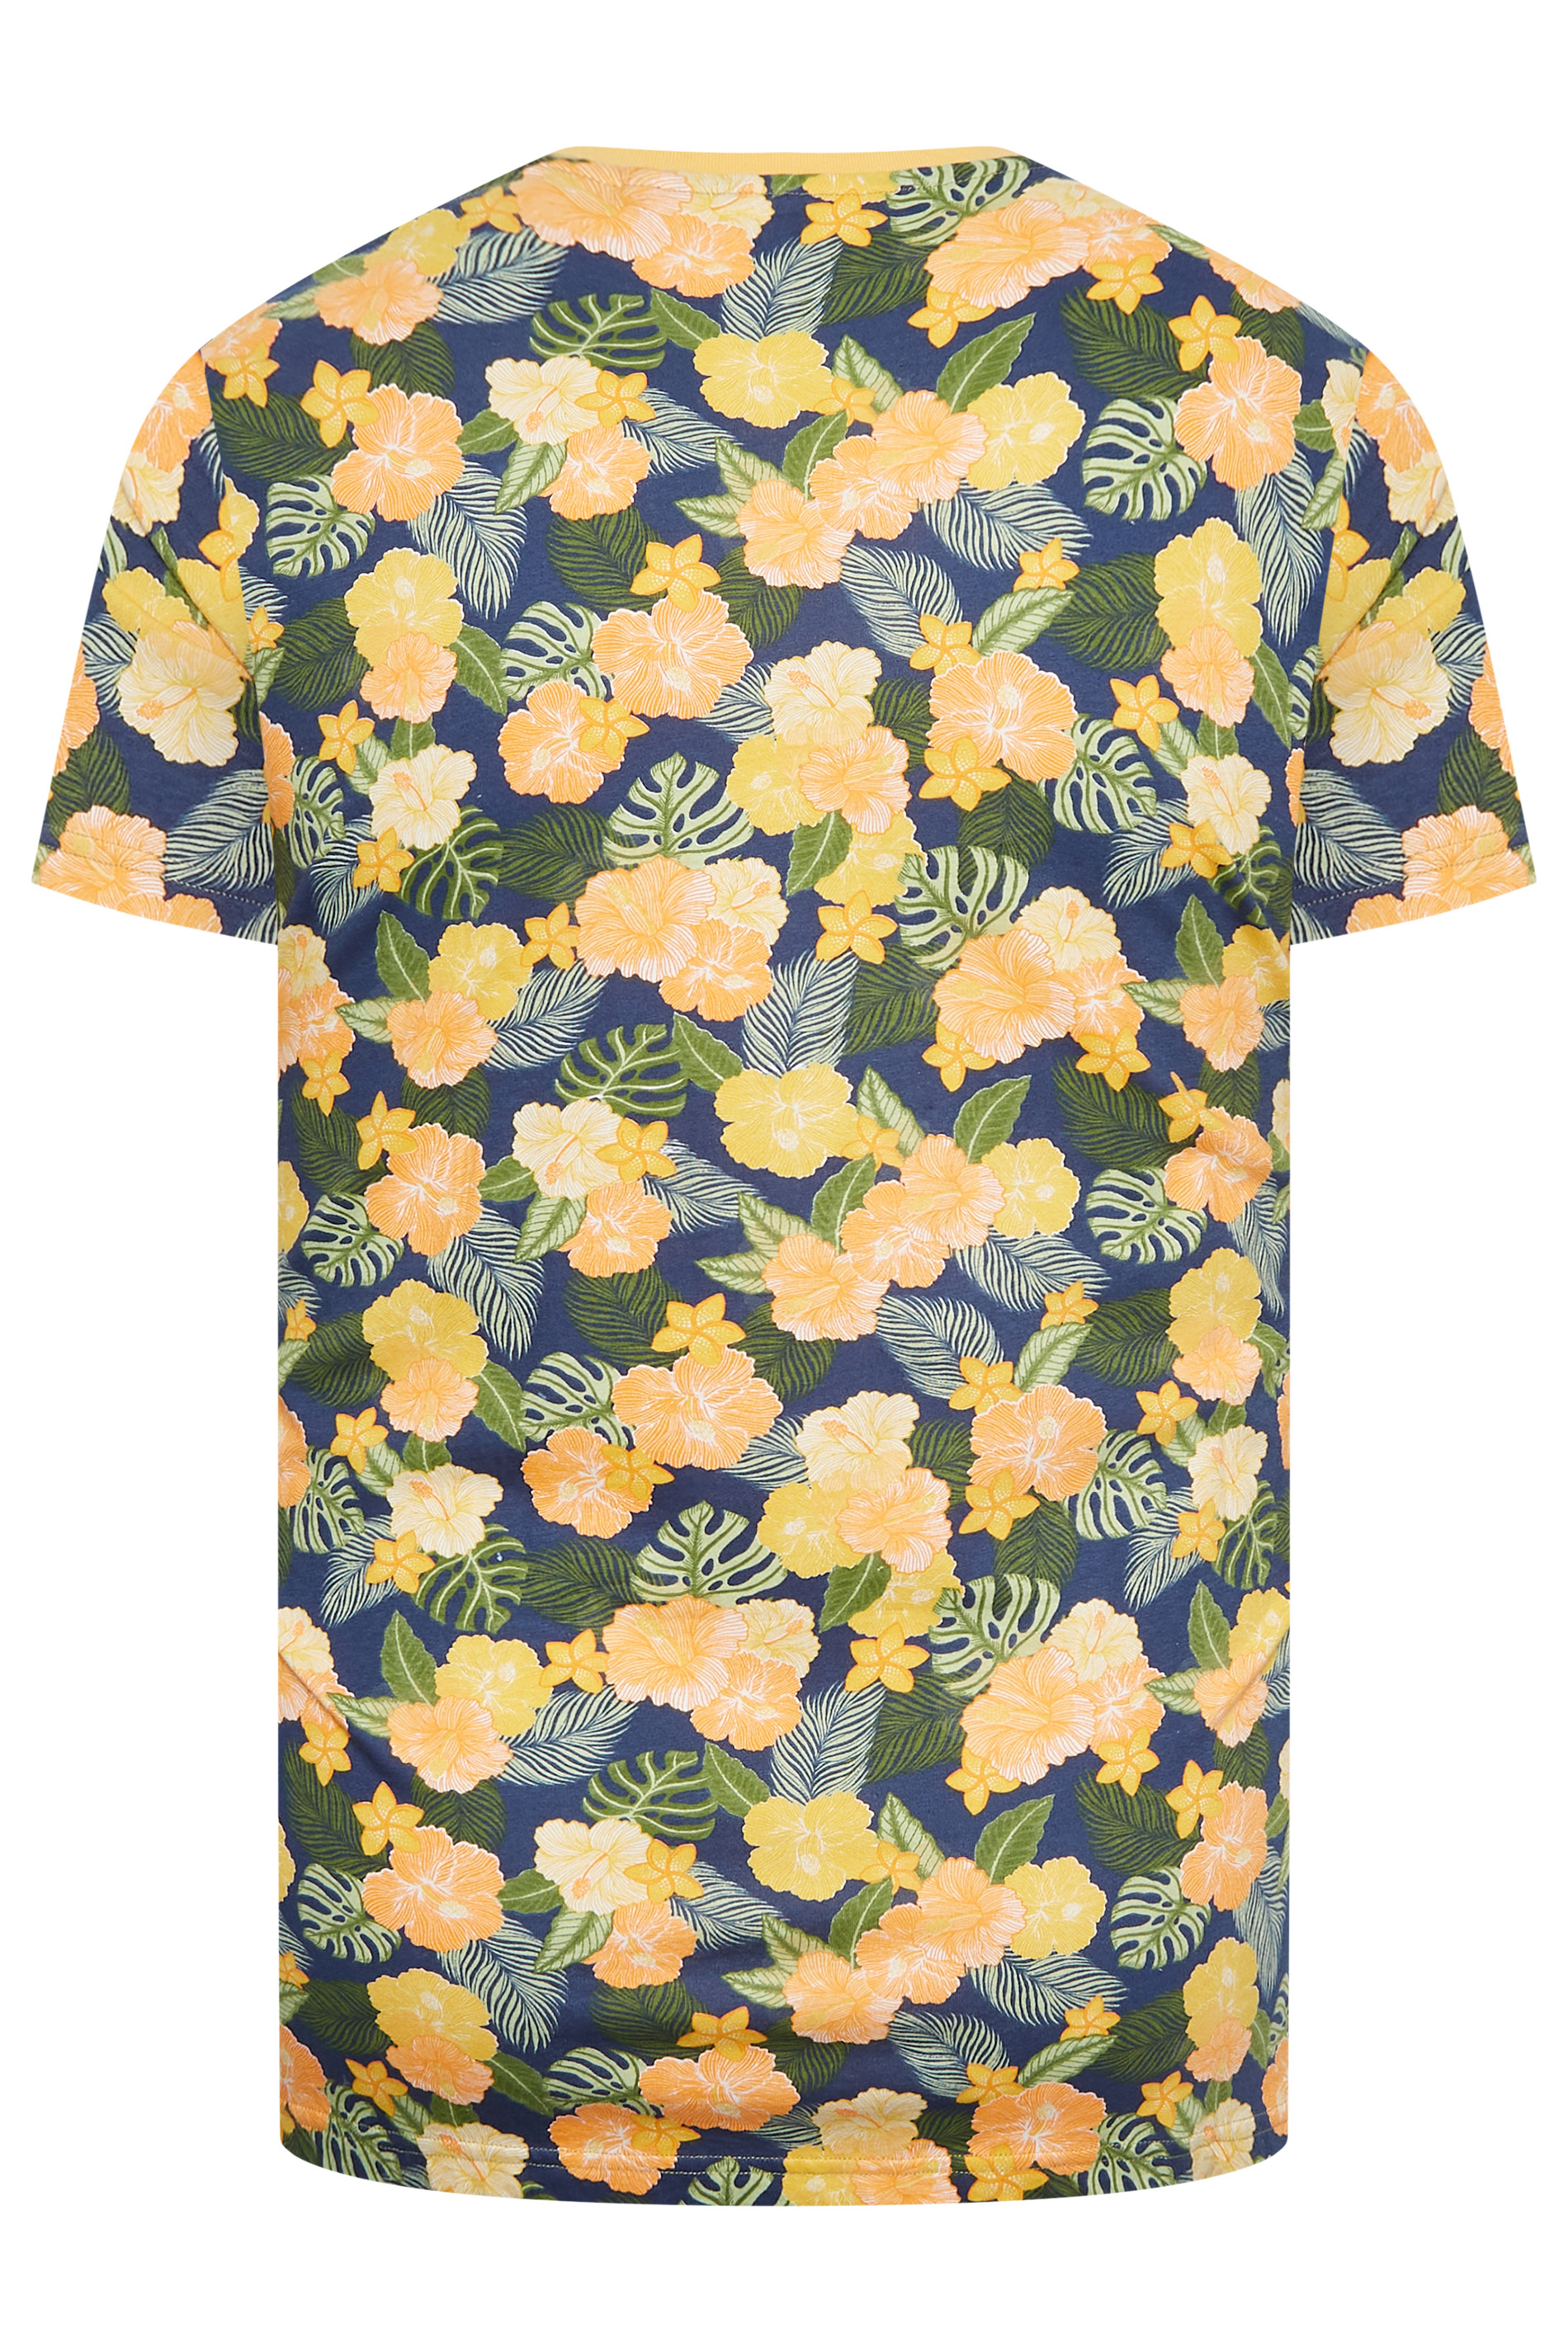 BadRhino Big & Tall Yellow Hawaiian T-shirt | BadRhino